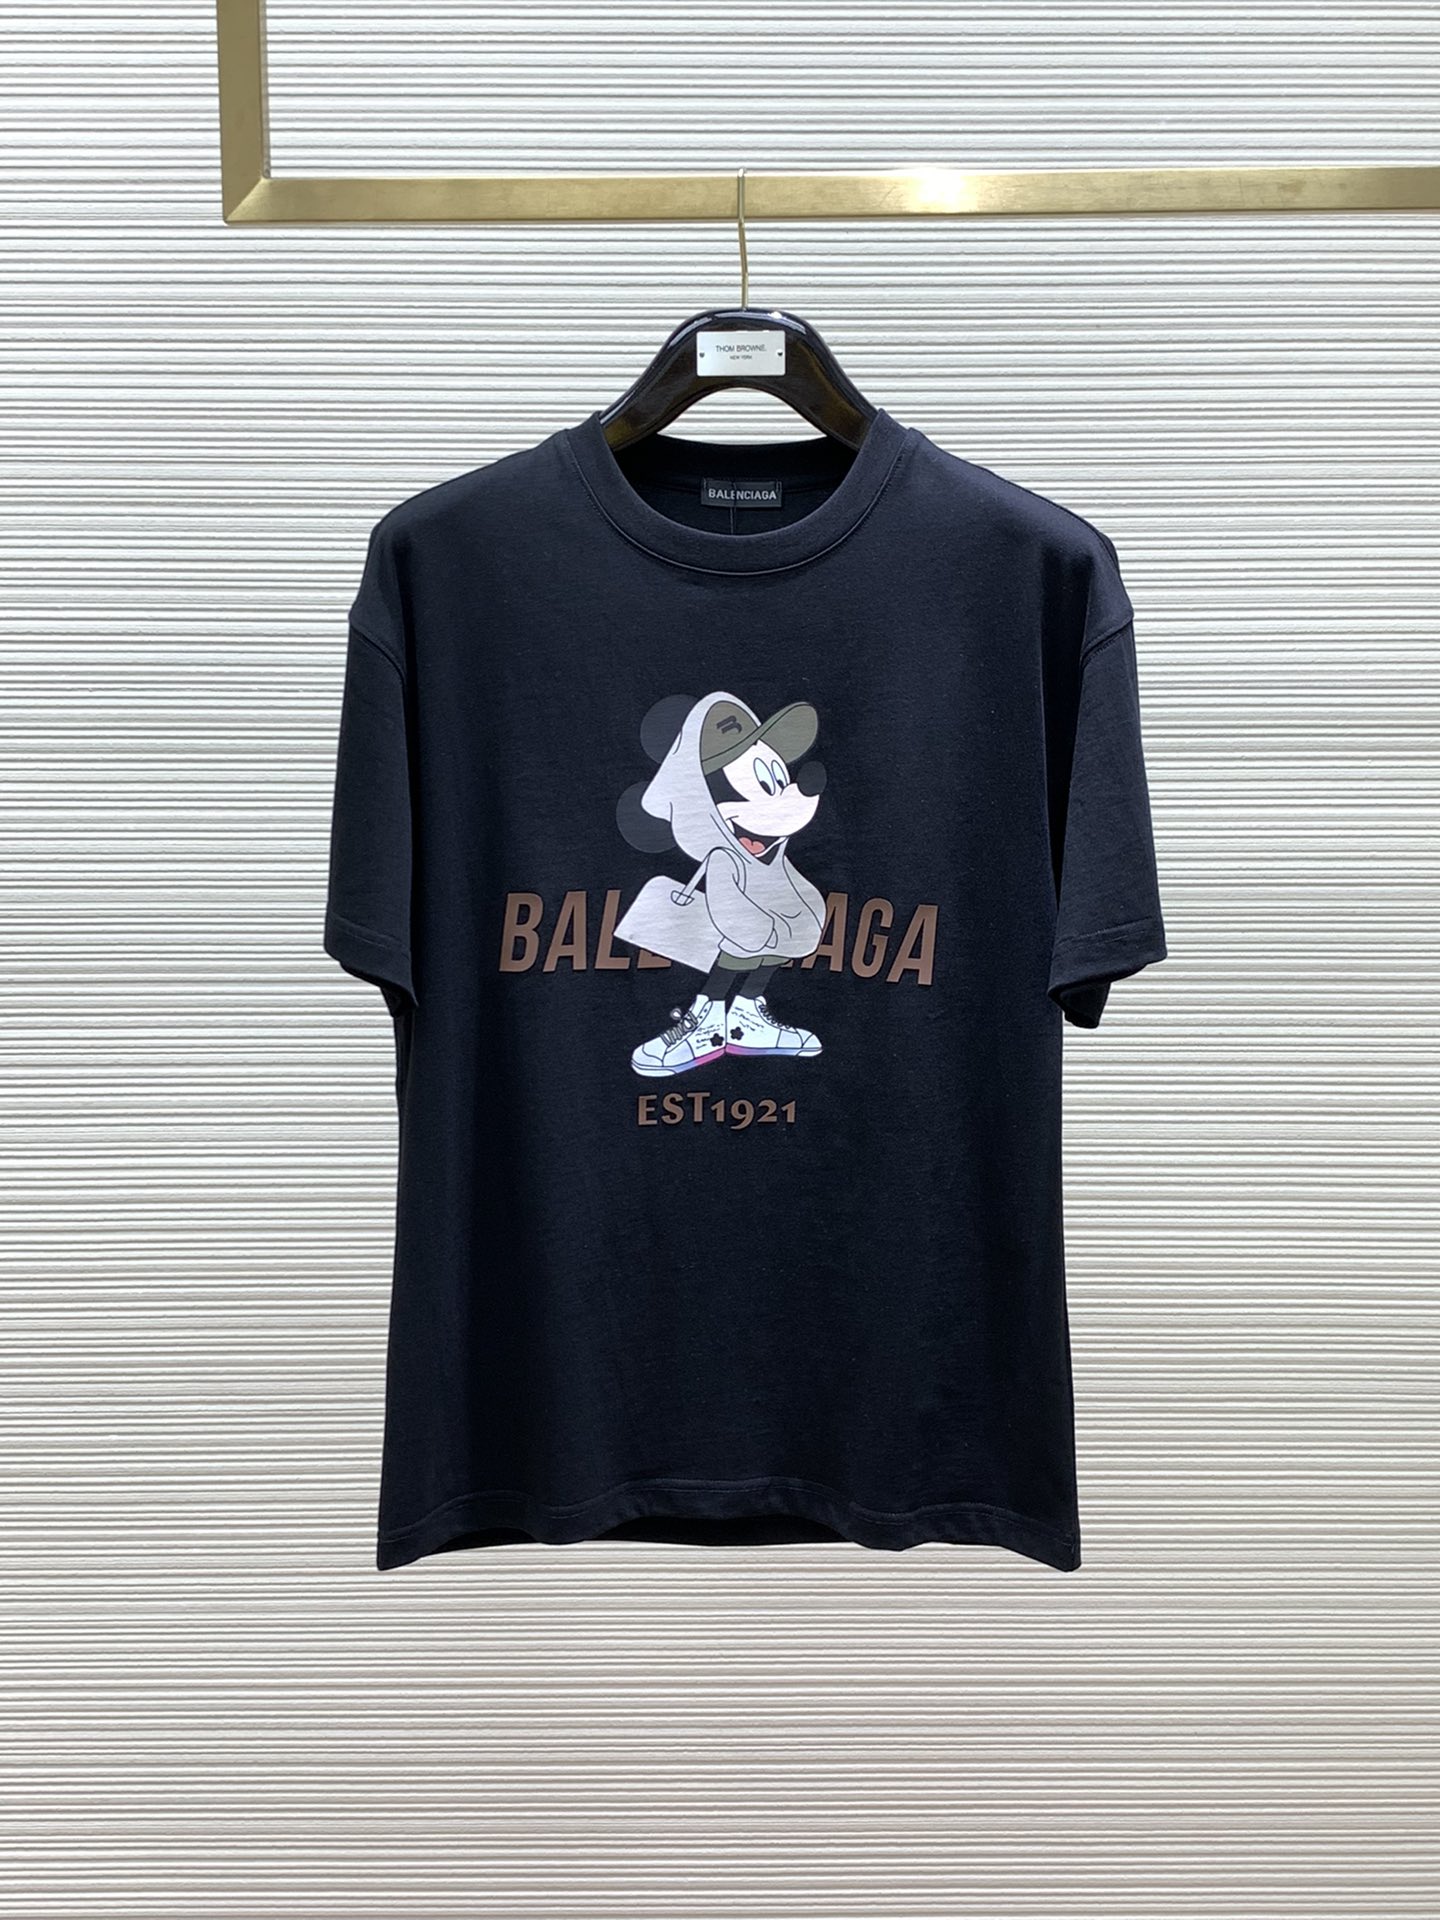 Replica Best
 Balenciaga Clothing T-Shirt Printing Summer Collection Fashion Short Sleeve